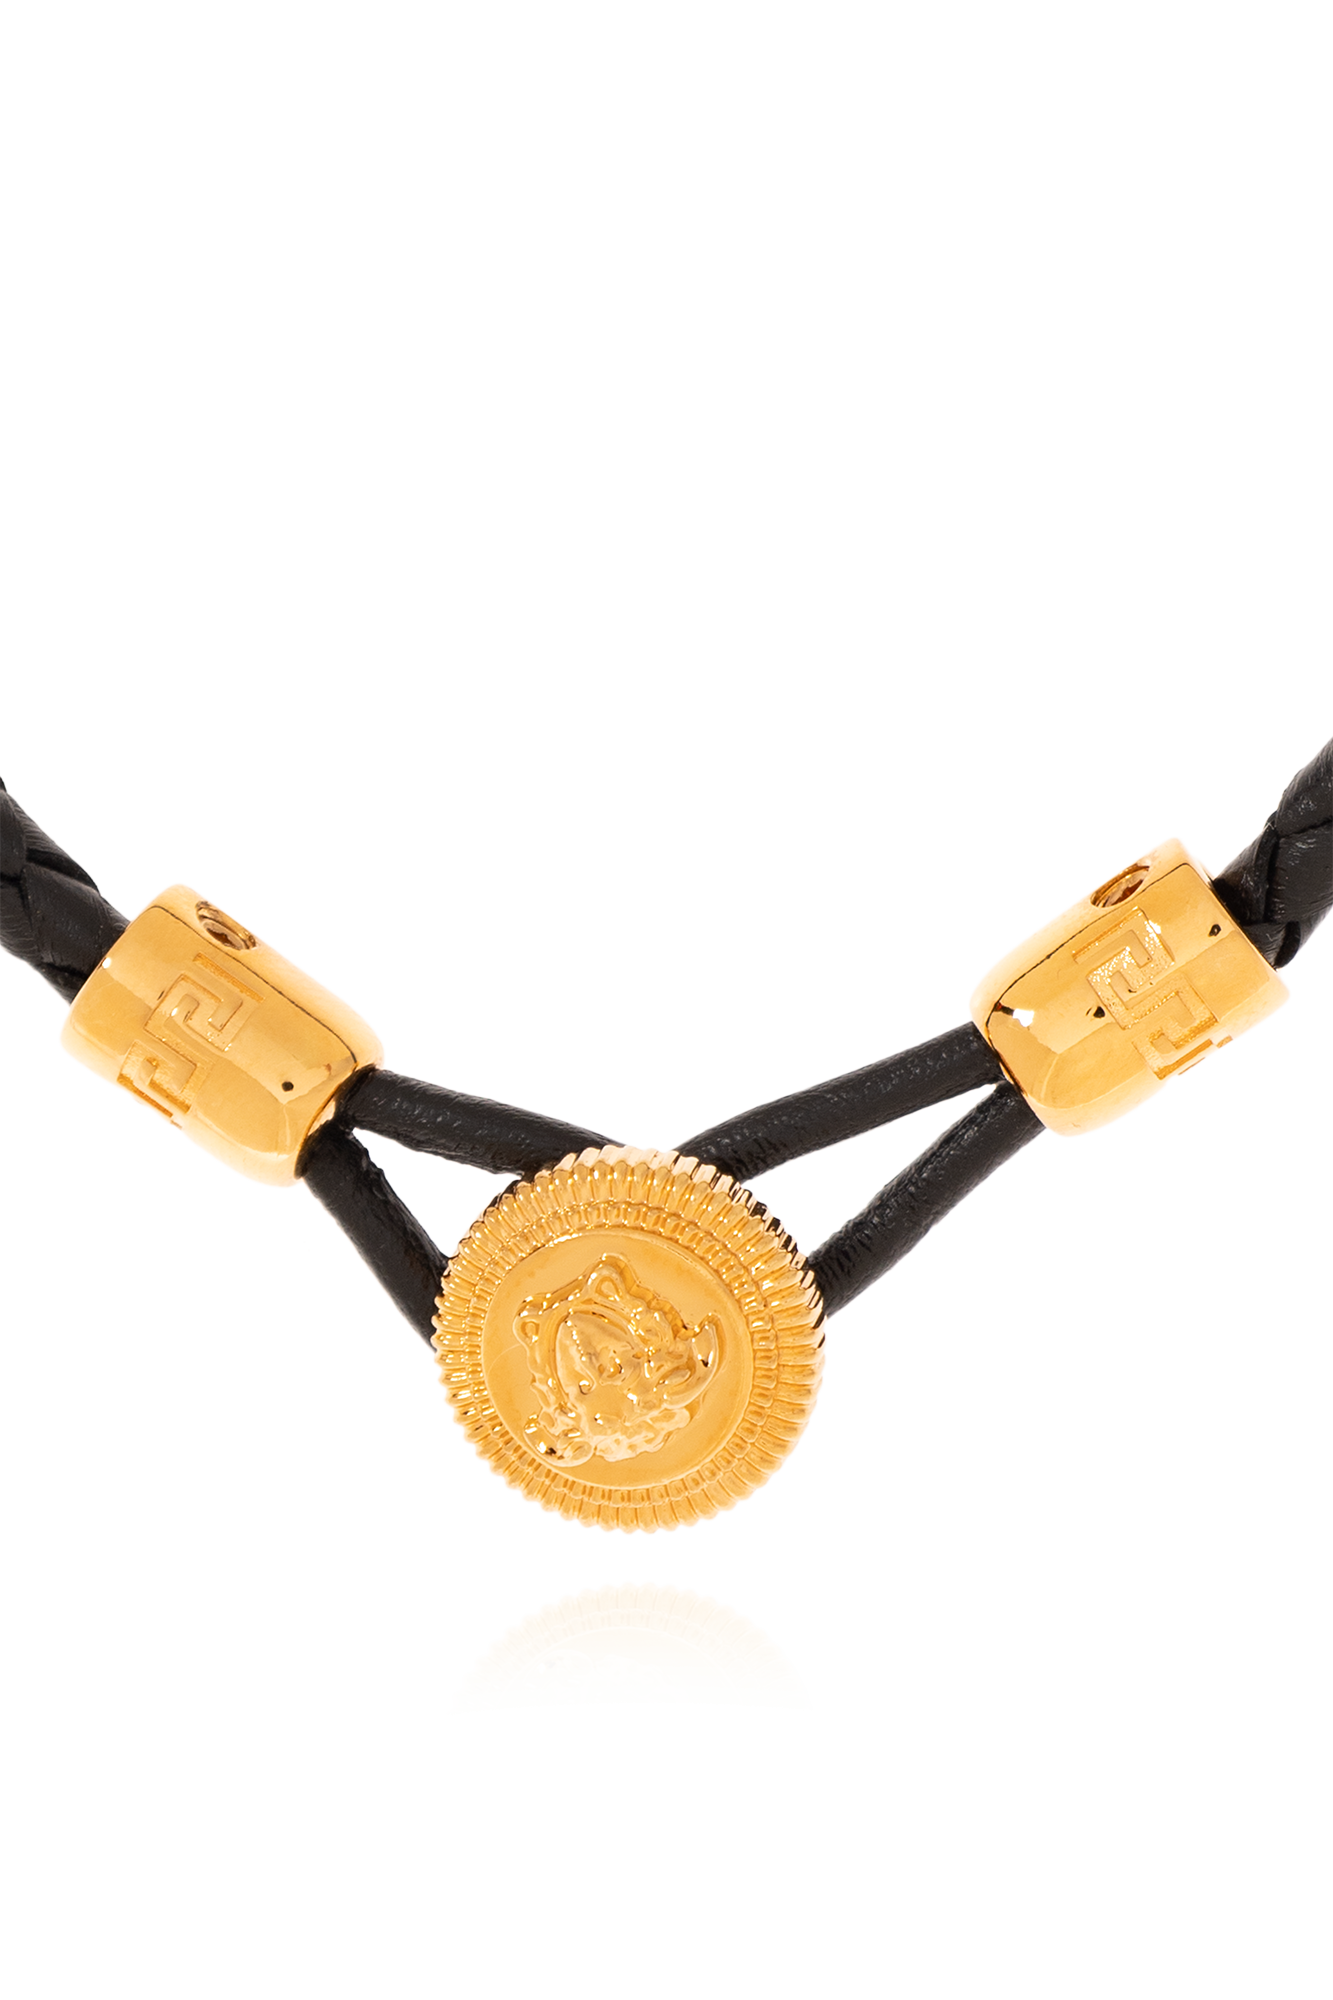 Versace Bracelet with logo